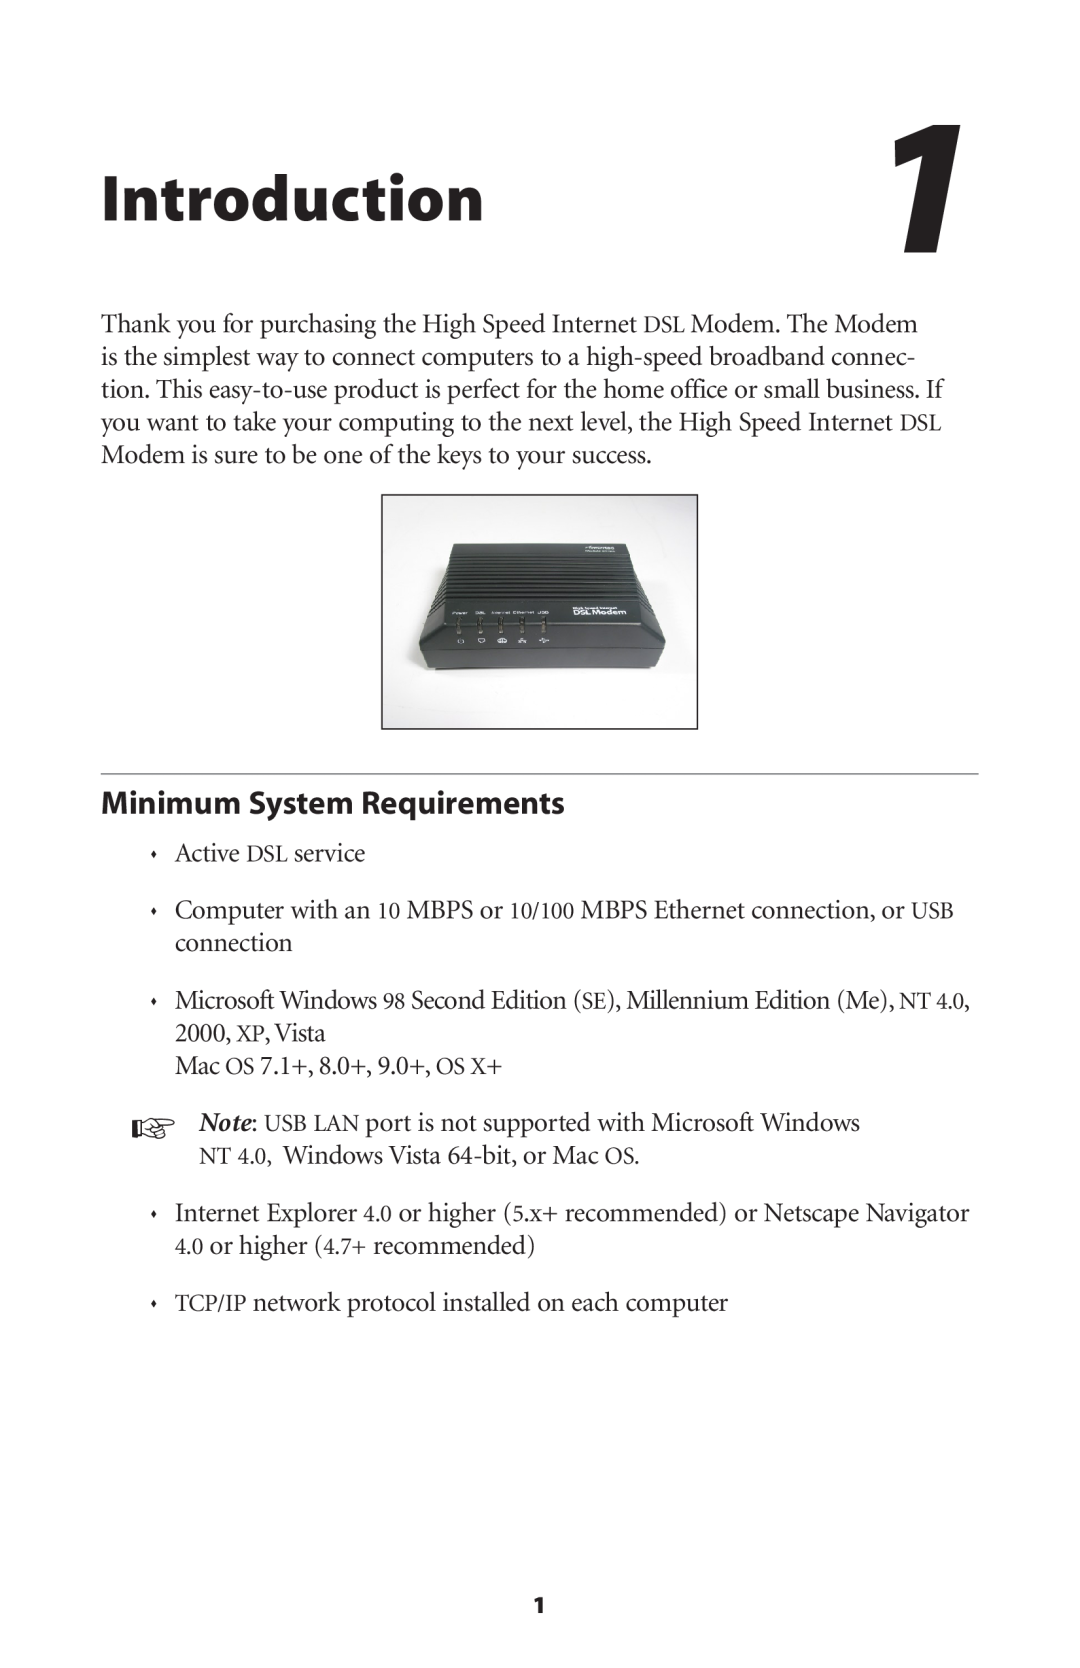 Verizon GT701C user manual Introduction1, Minimum System Requirements 